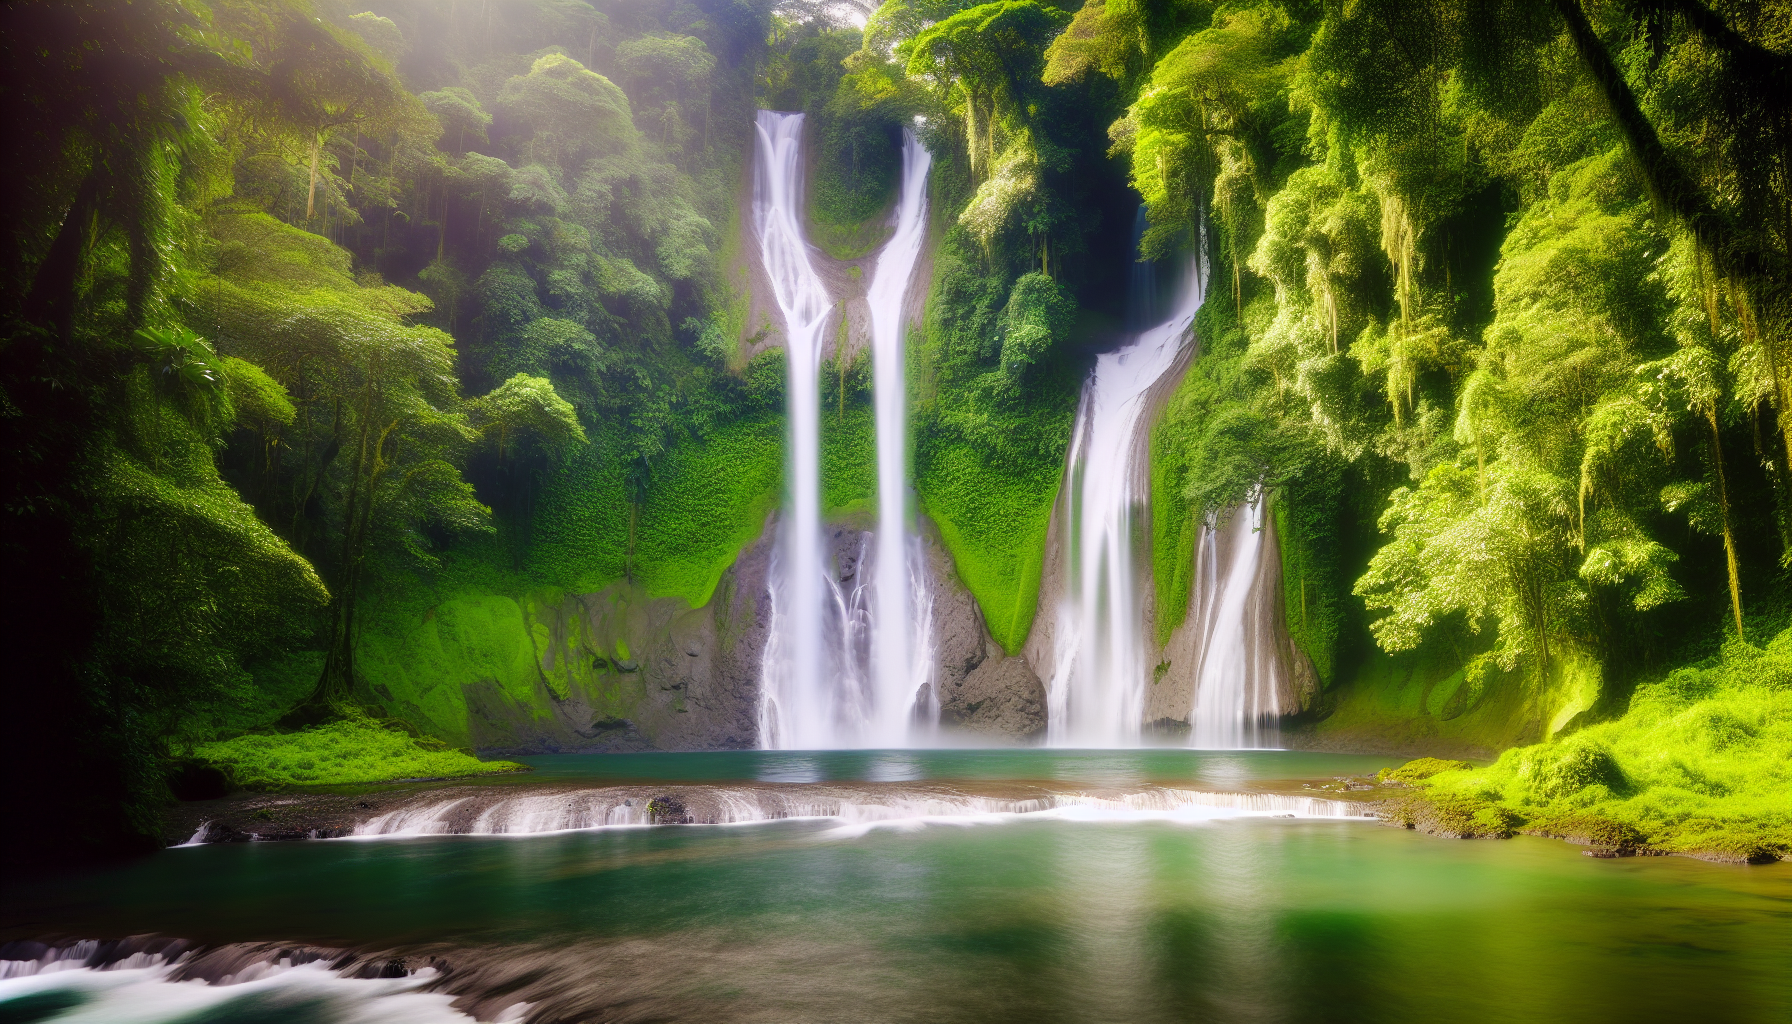 Scenic view of the Montezuma Waterfalls with lush jungle surroundings